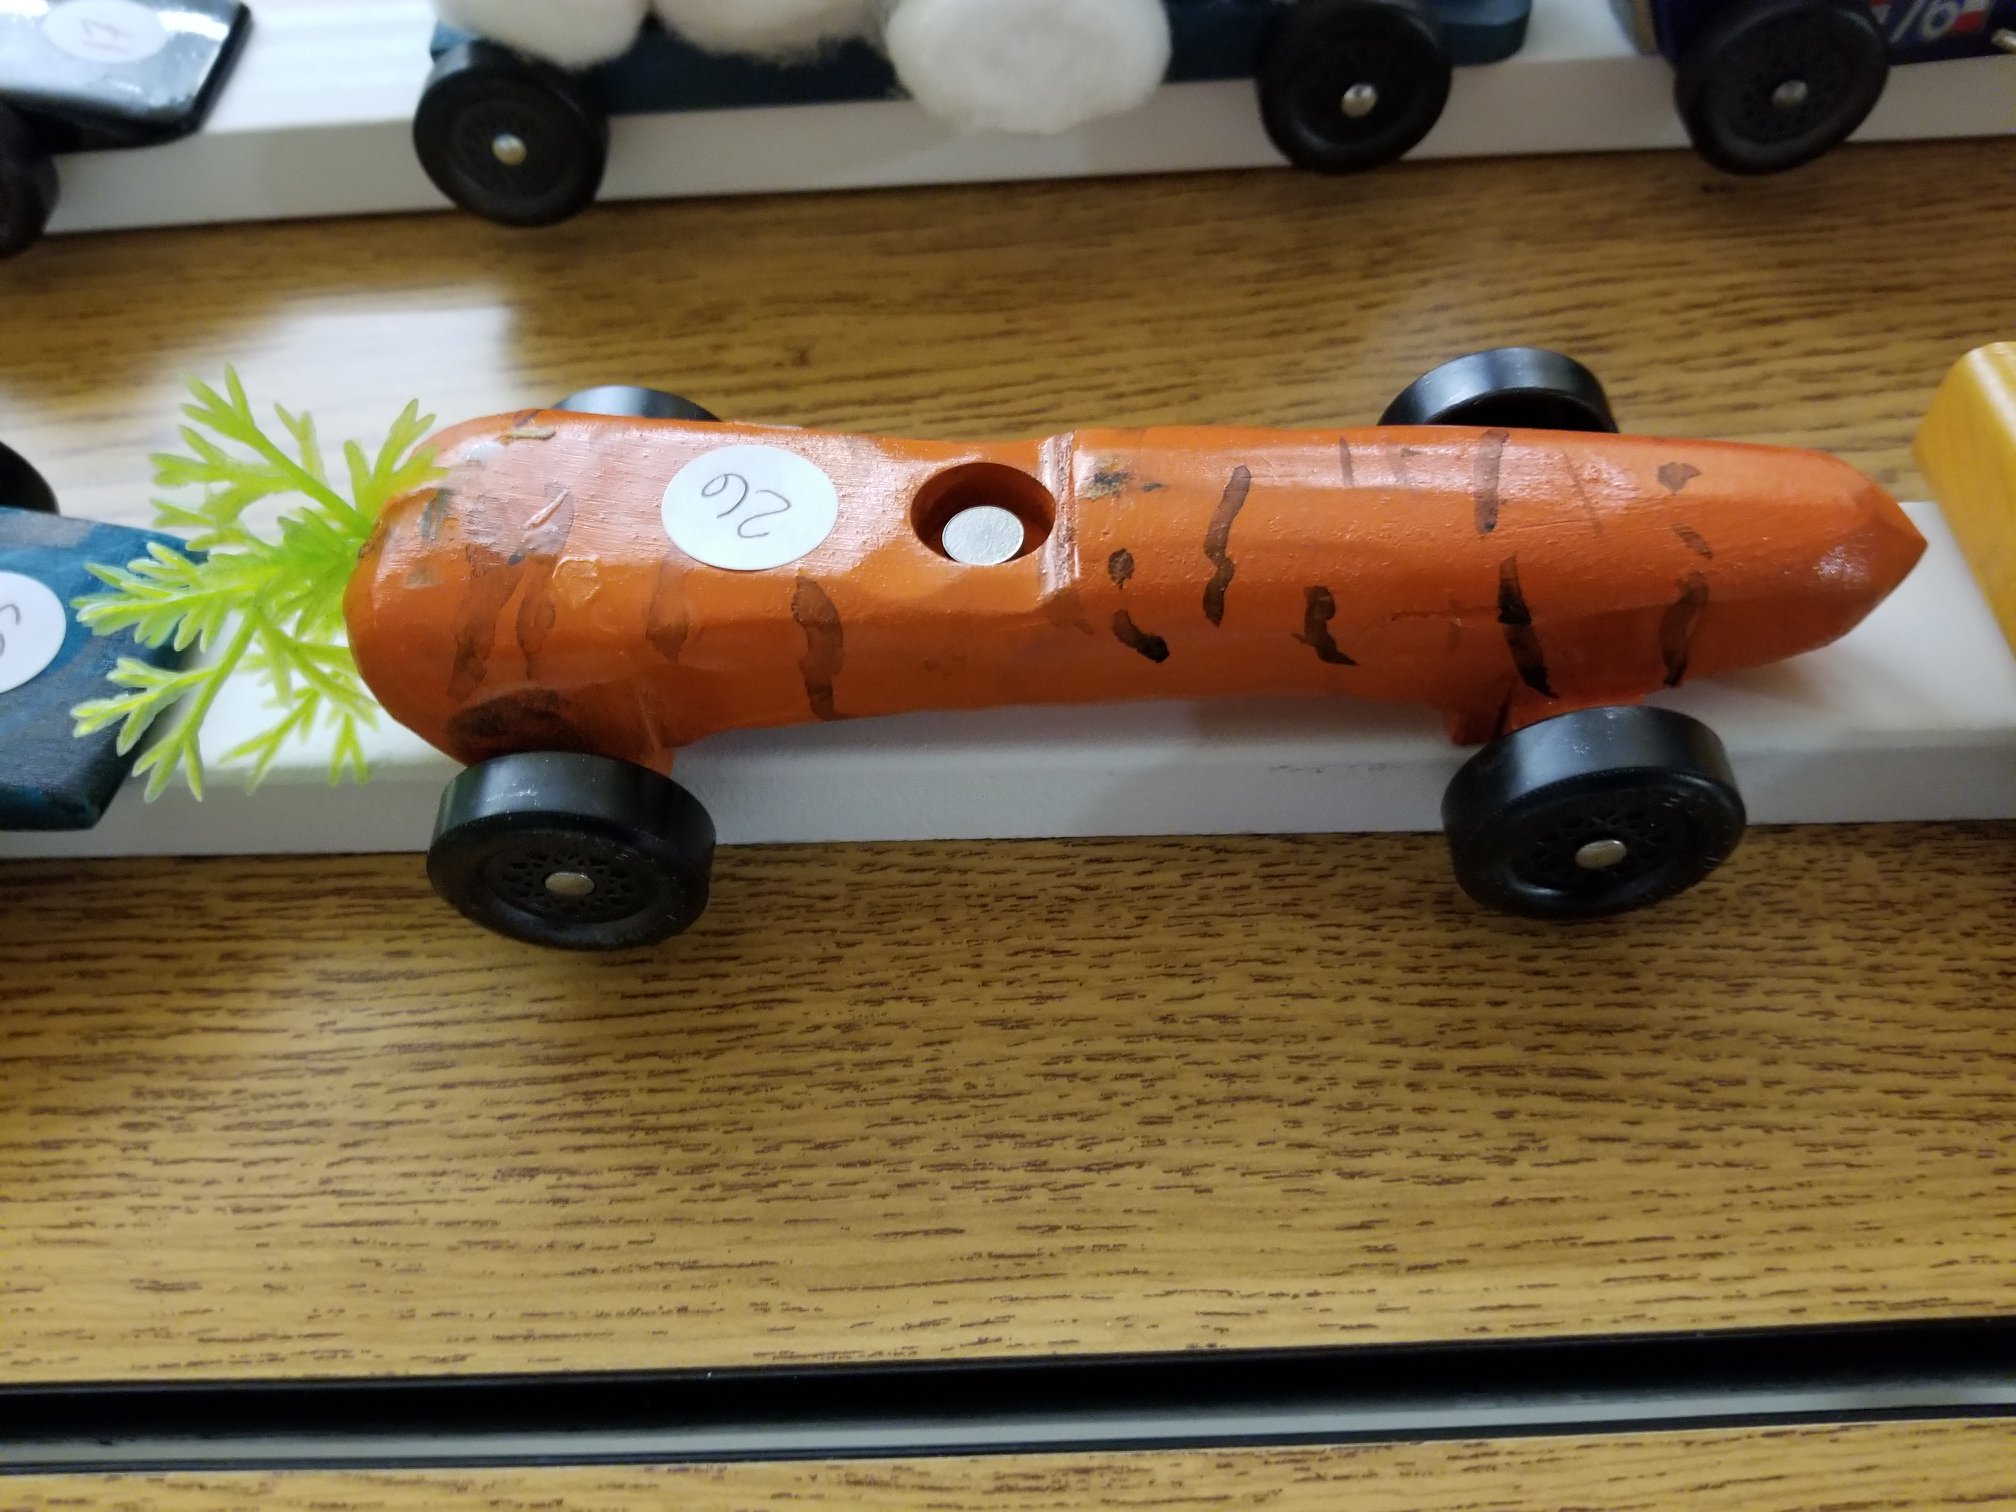 Carrot Car